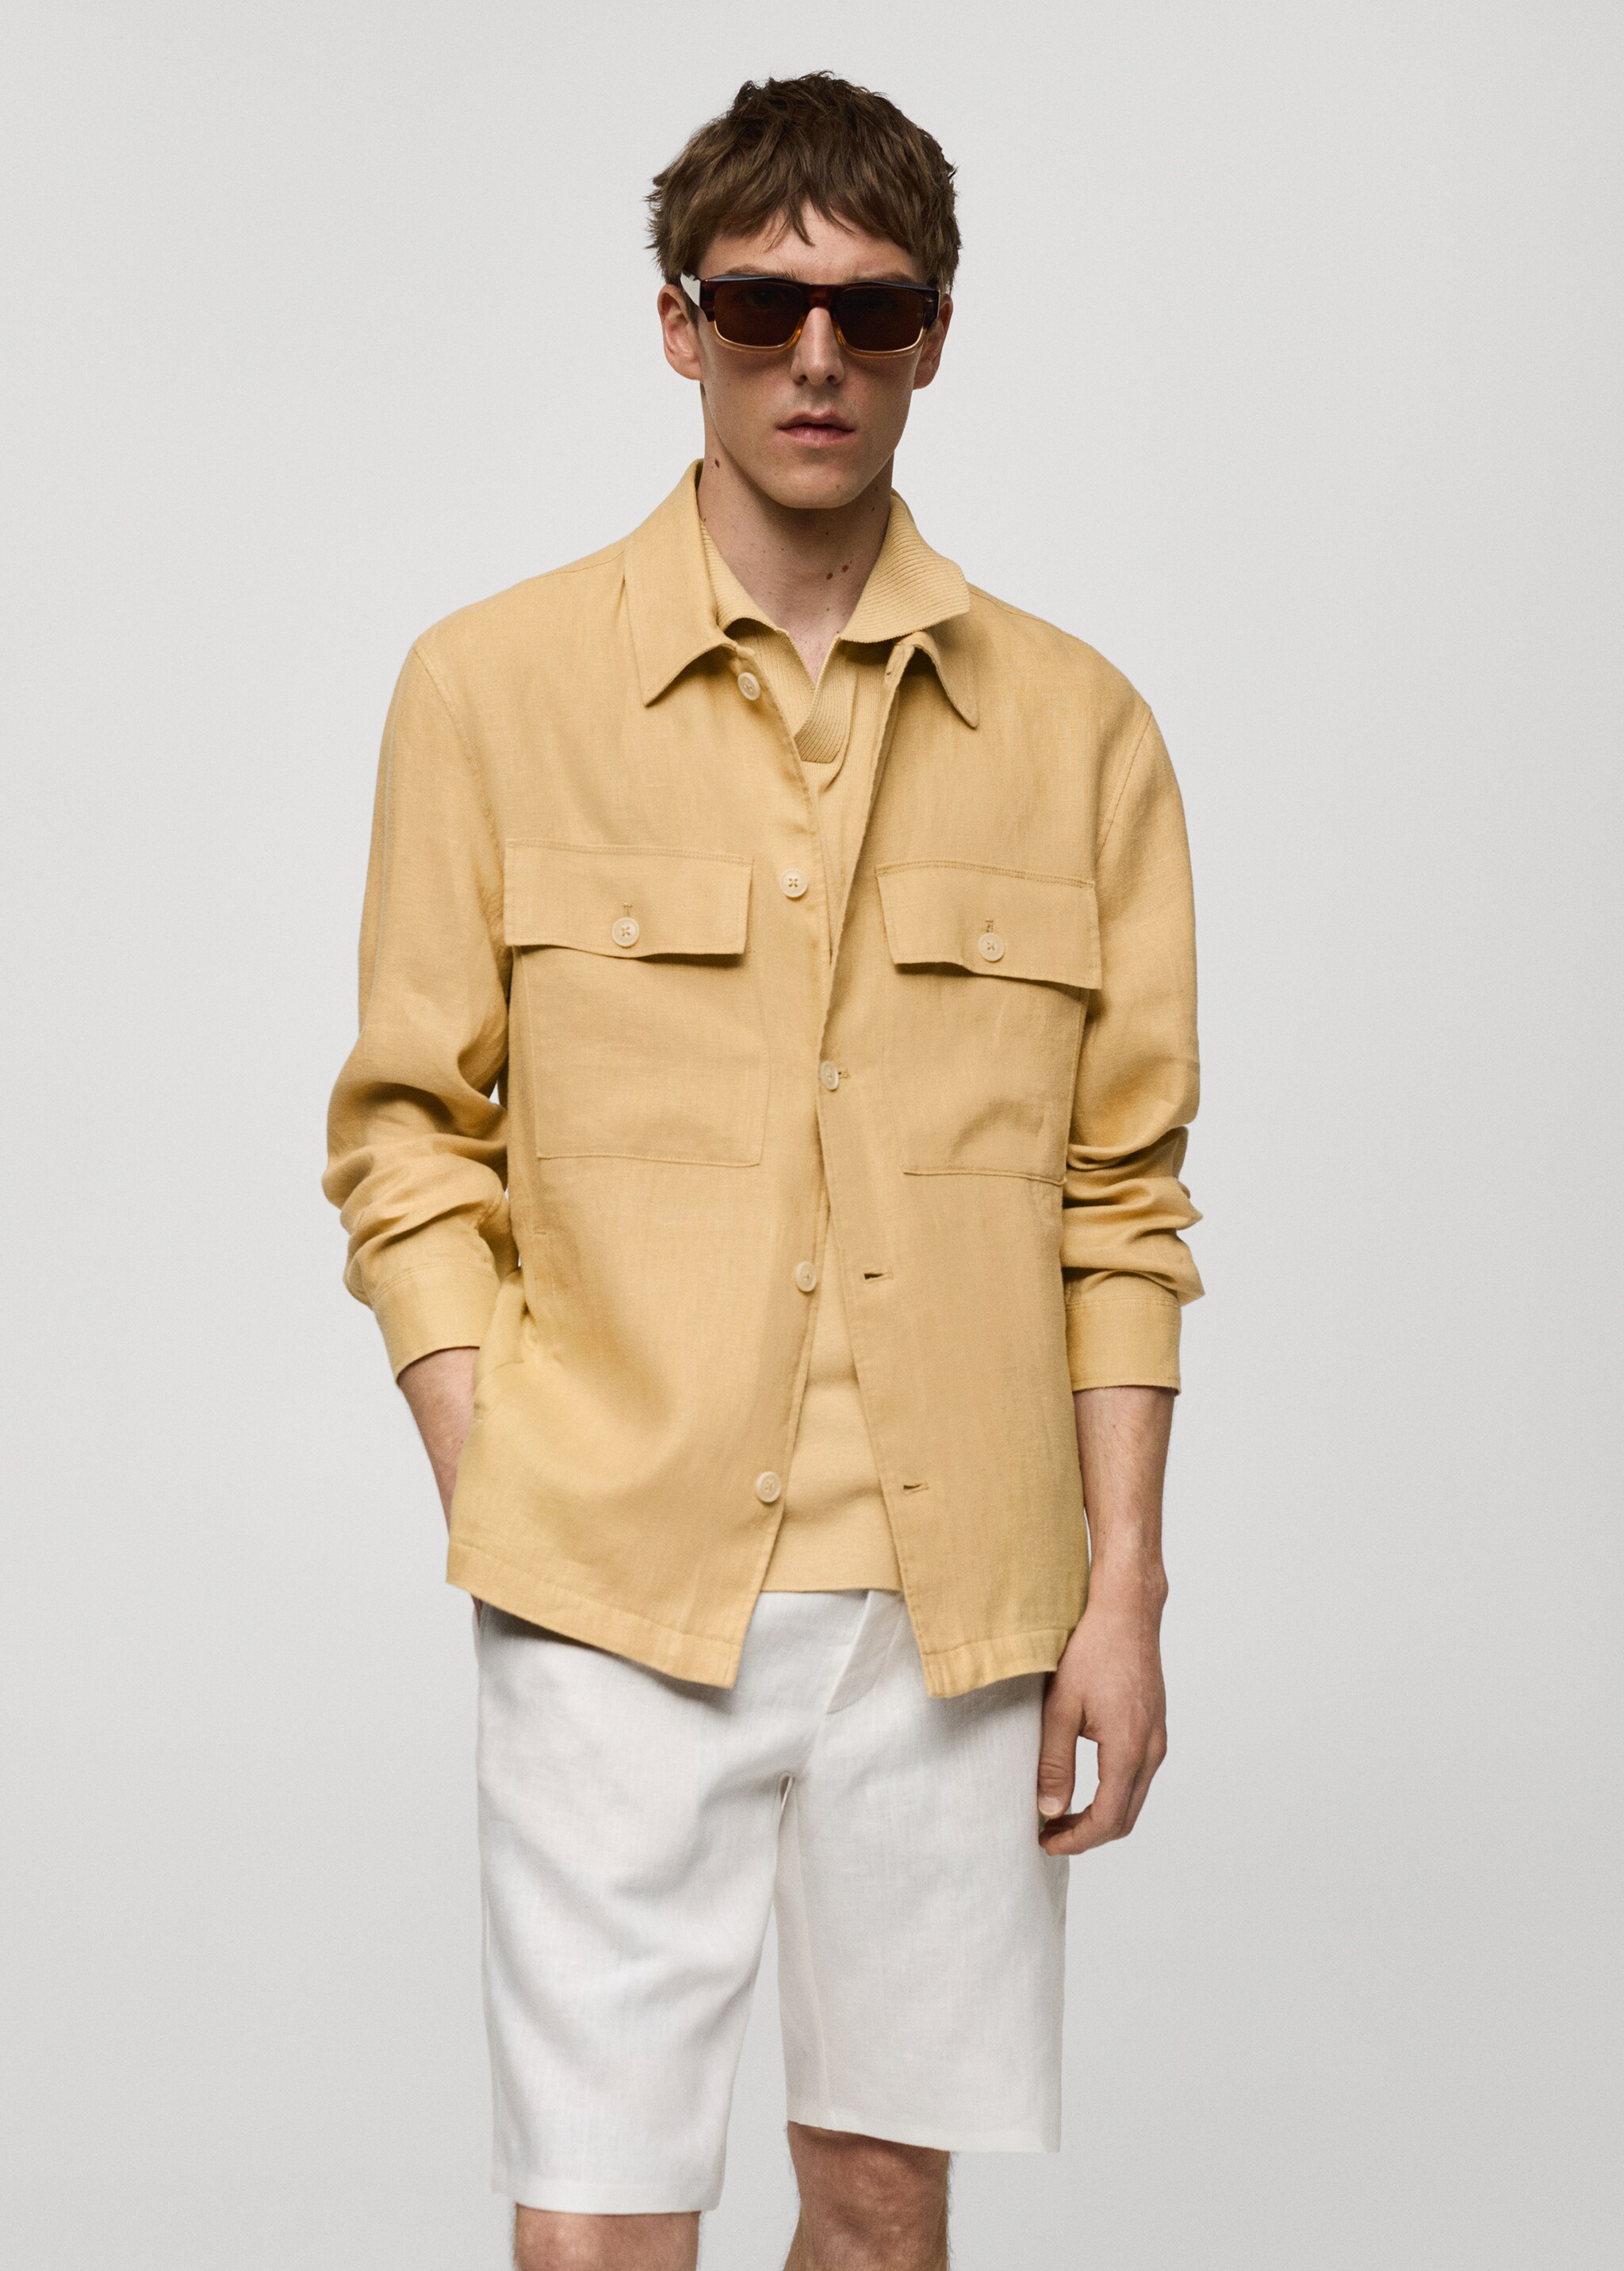 100% linen overshirt with pockets - Medium plane